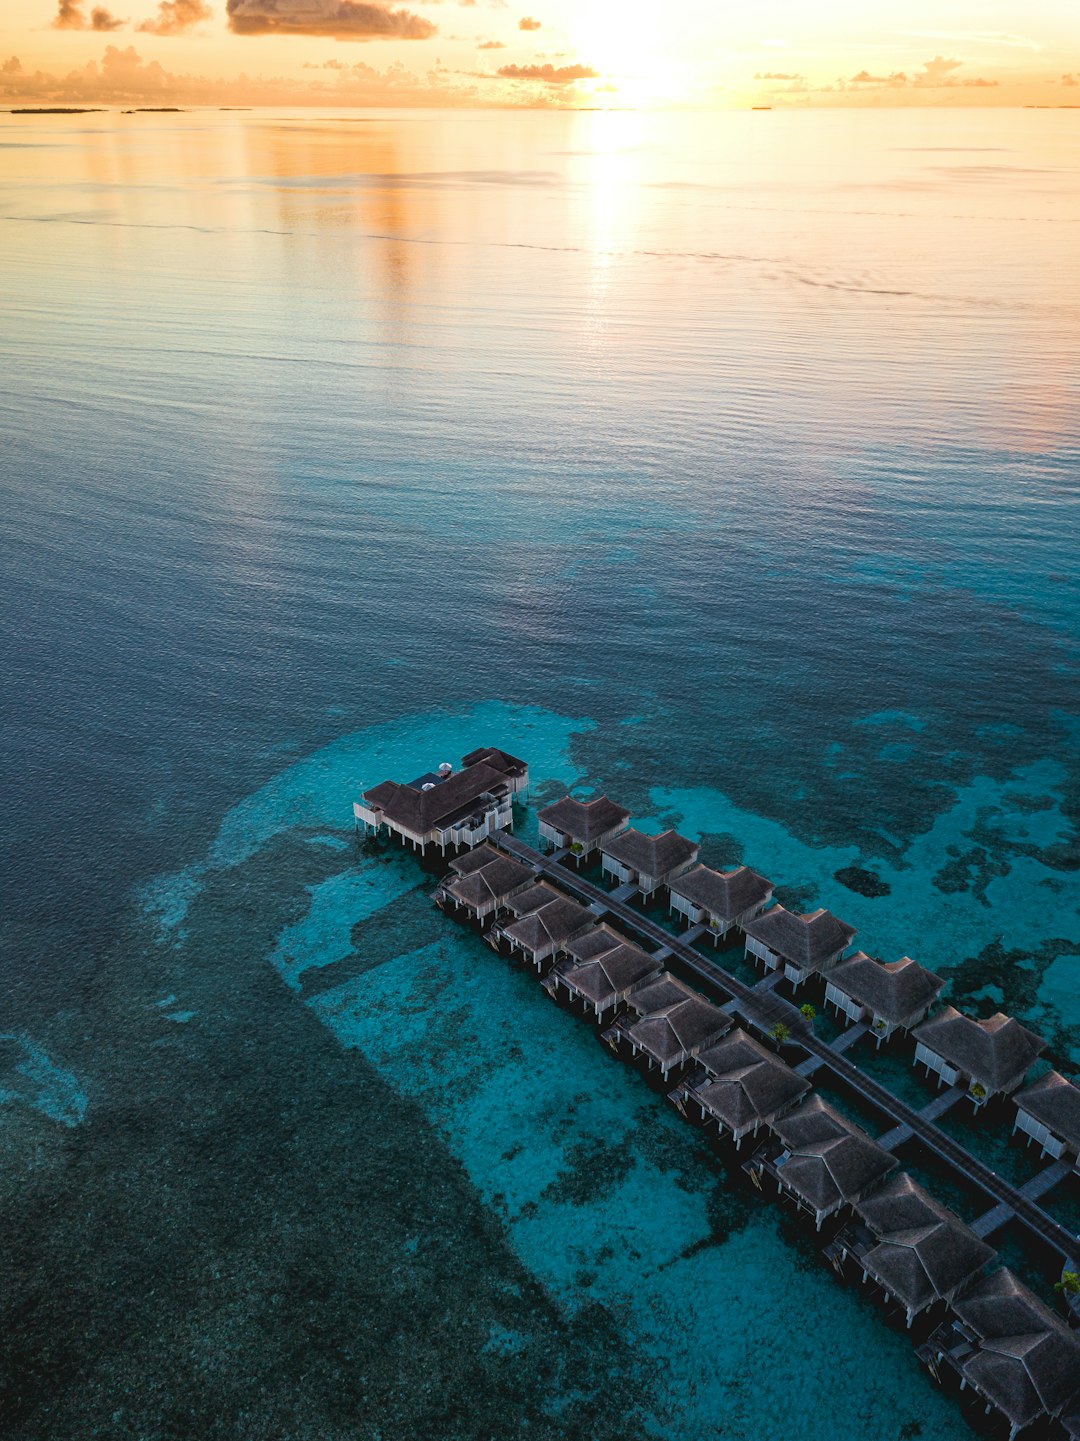 Coastal and oceanic landforms photo spot LUX South Ari Atoll Resort & Villas Maldive Islands